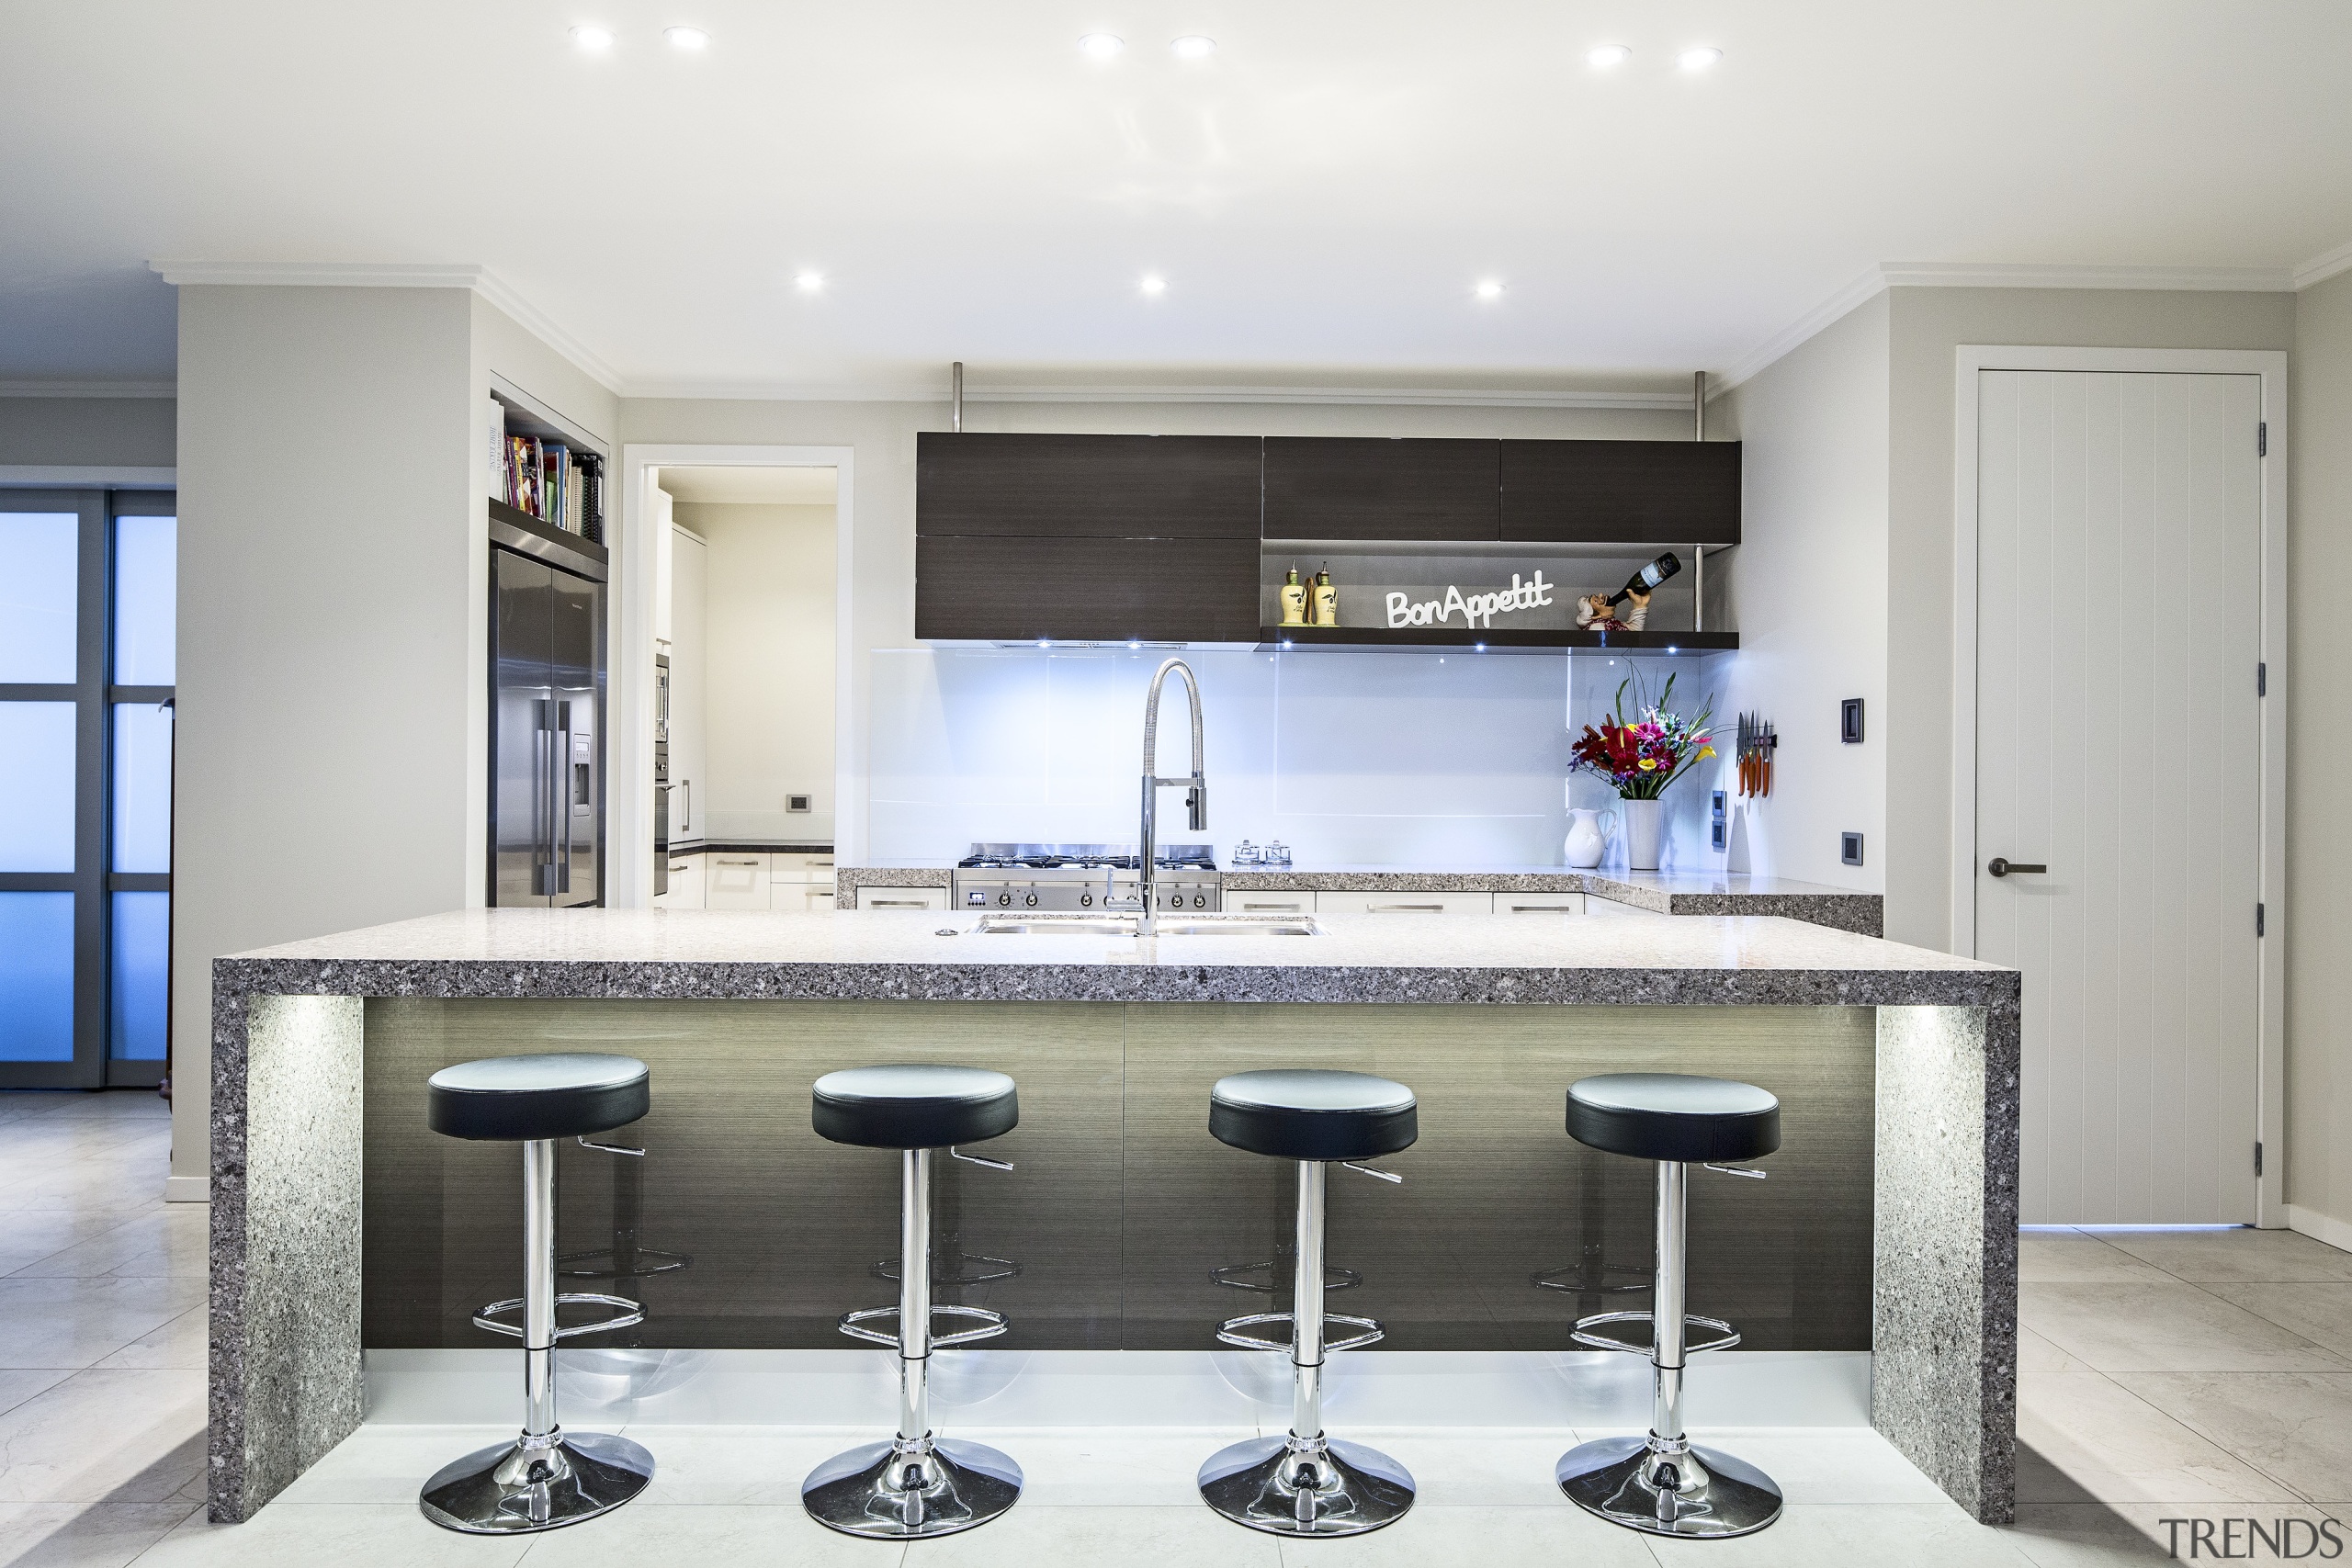 Inside Vision kitchen with Smeg appliance - Inside countertop, cuisine classique, interior design, kitchen, real estate, room, white, gray